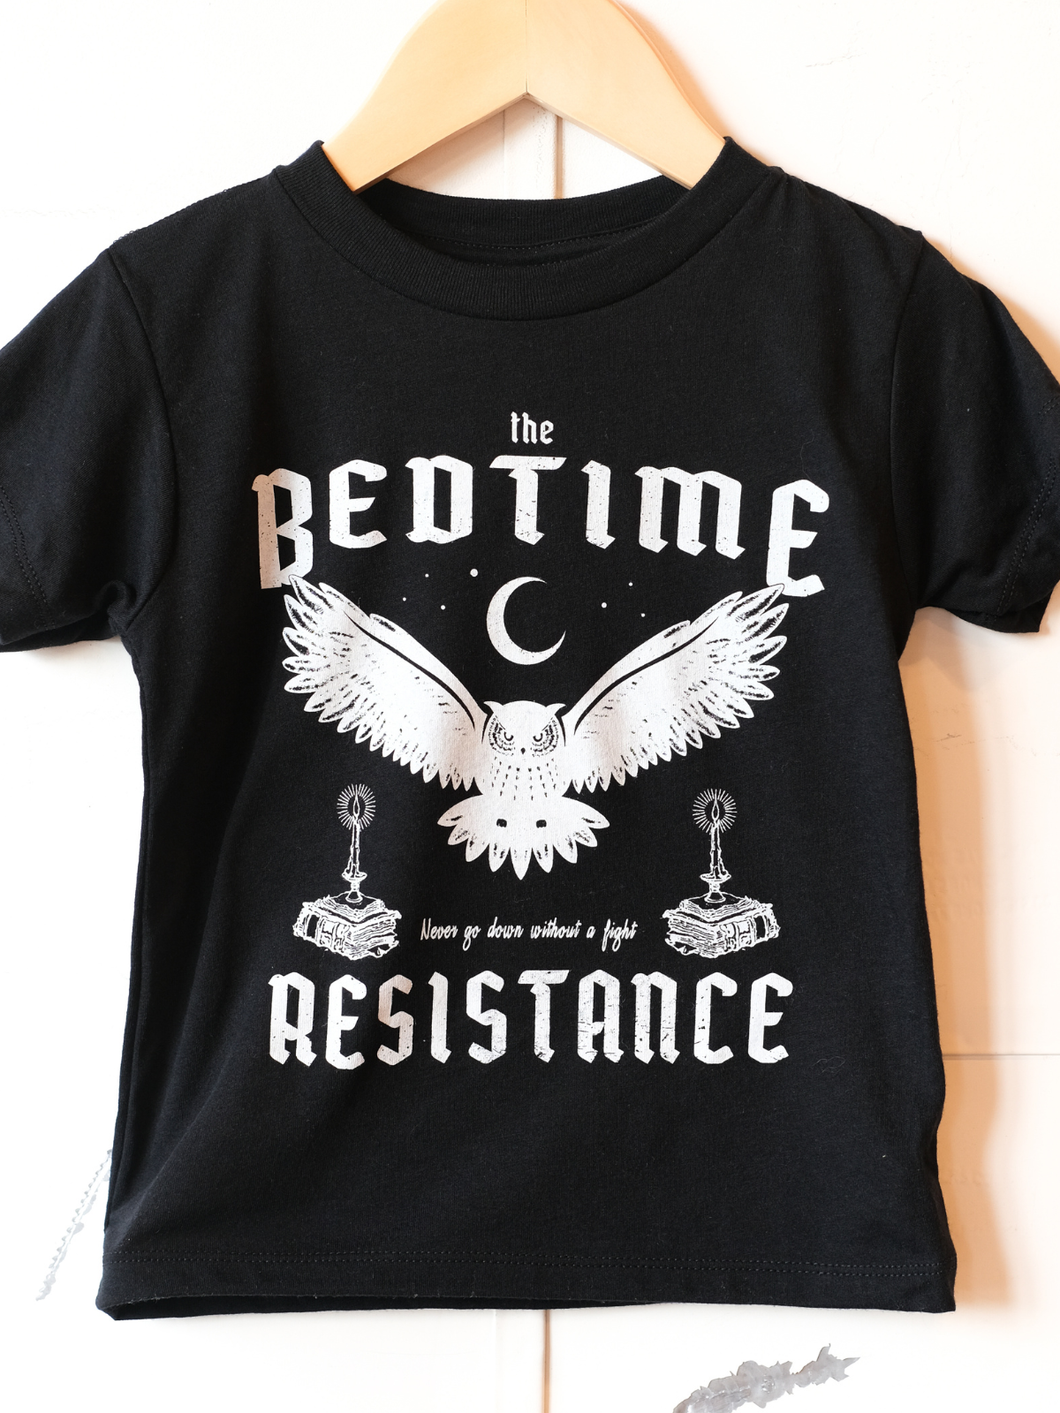 Bedtime Resistance | Kids Graphic Tee